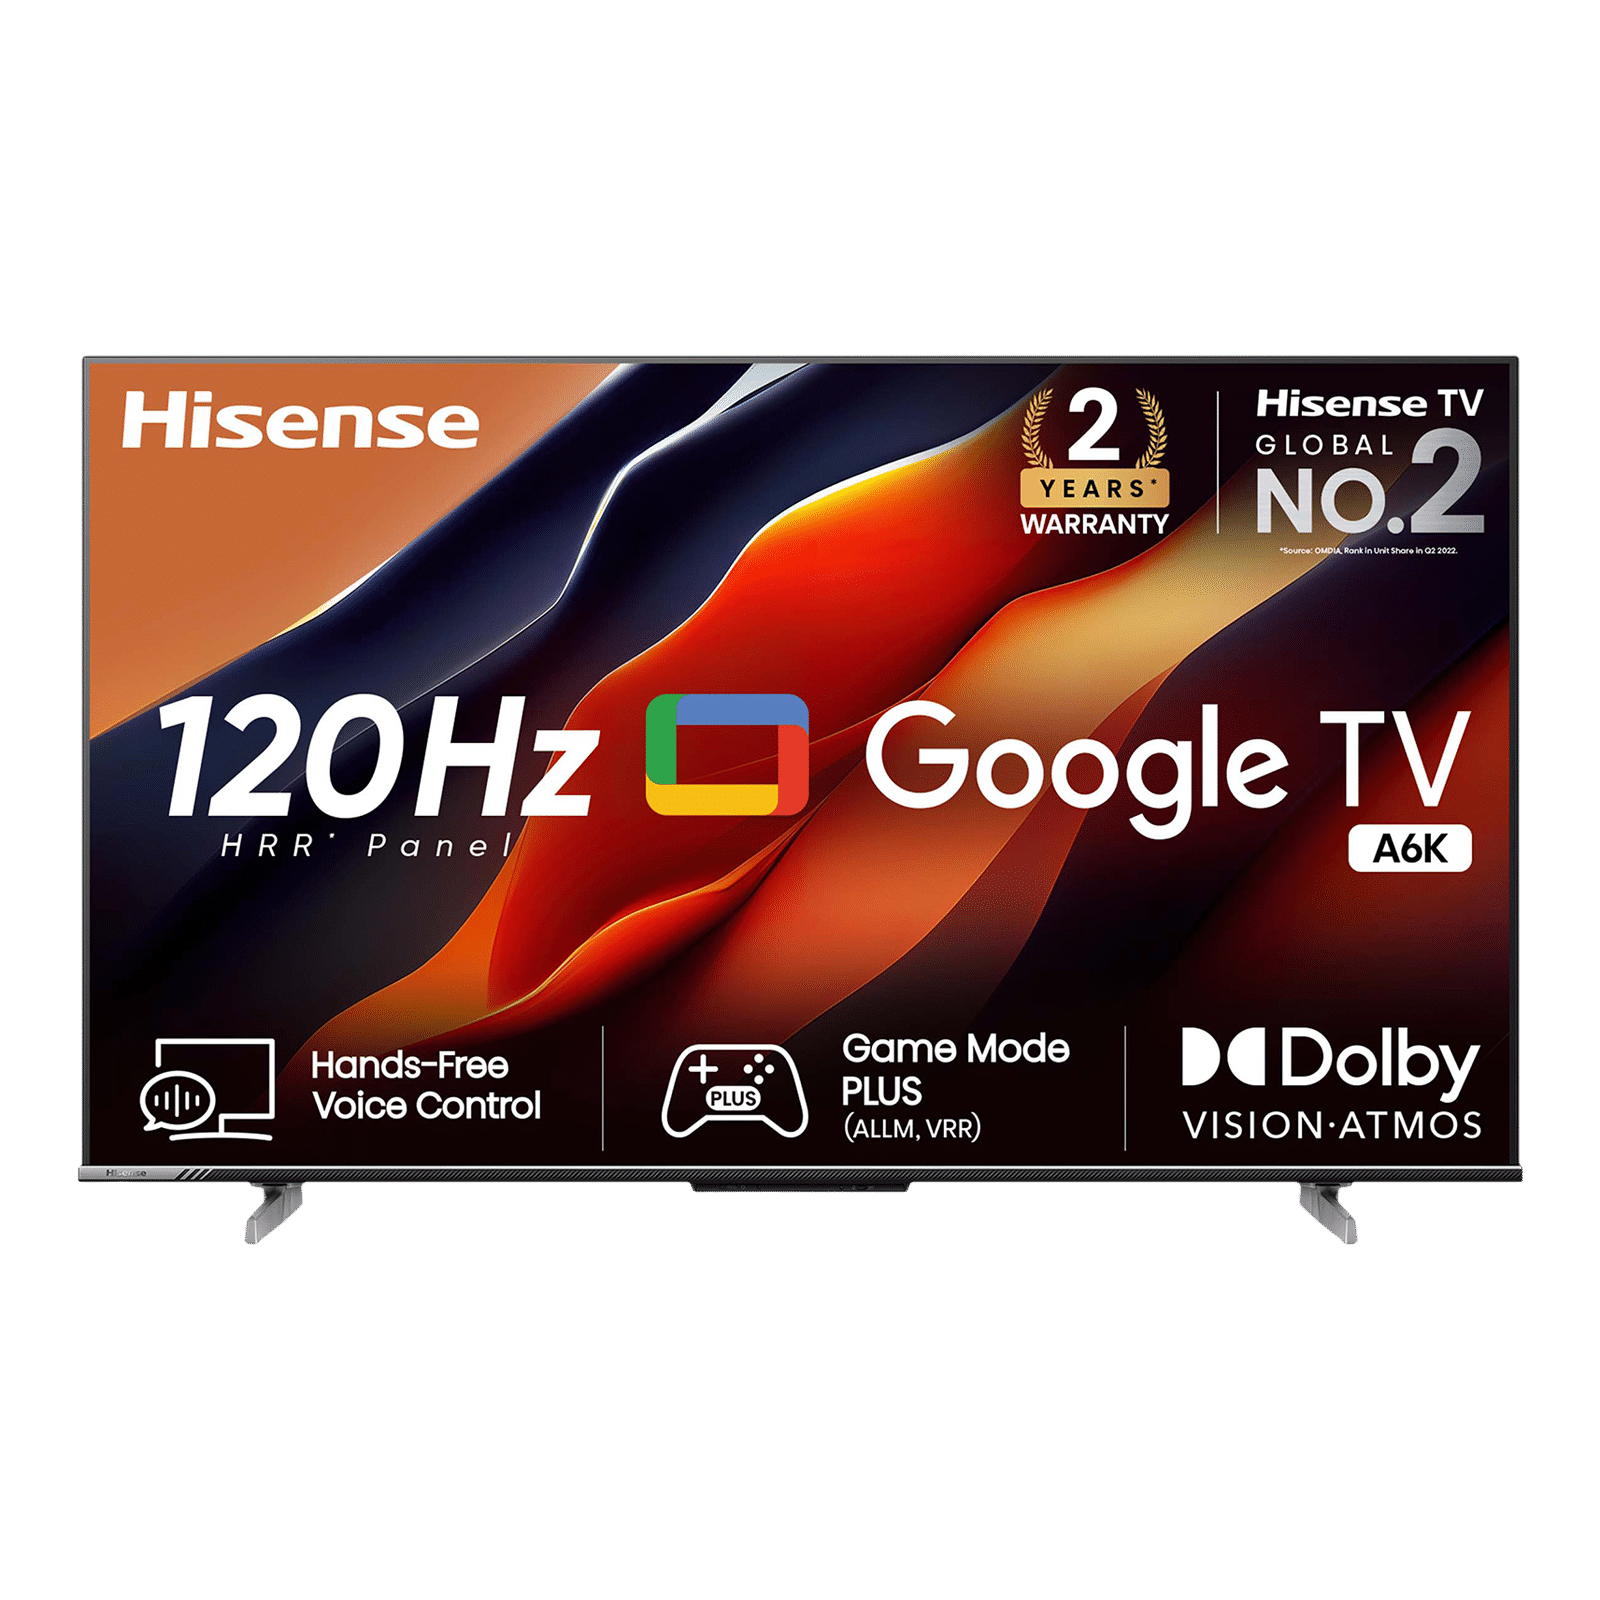 Hisense 43 Class A6 Series LED 4K UHD HDR Smart Google TV 43A6H - Best Buy